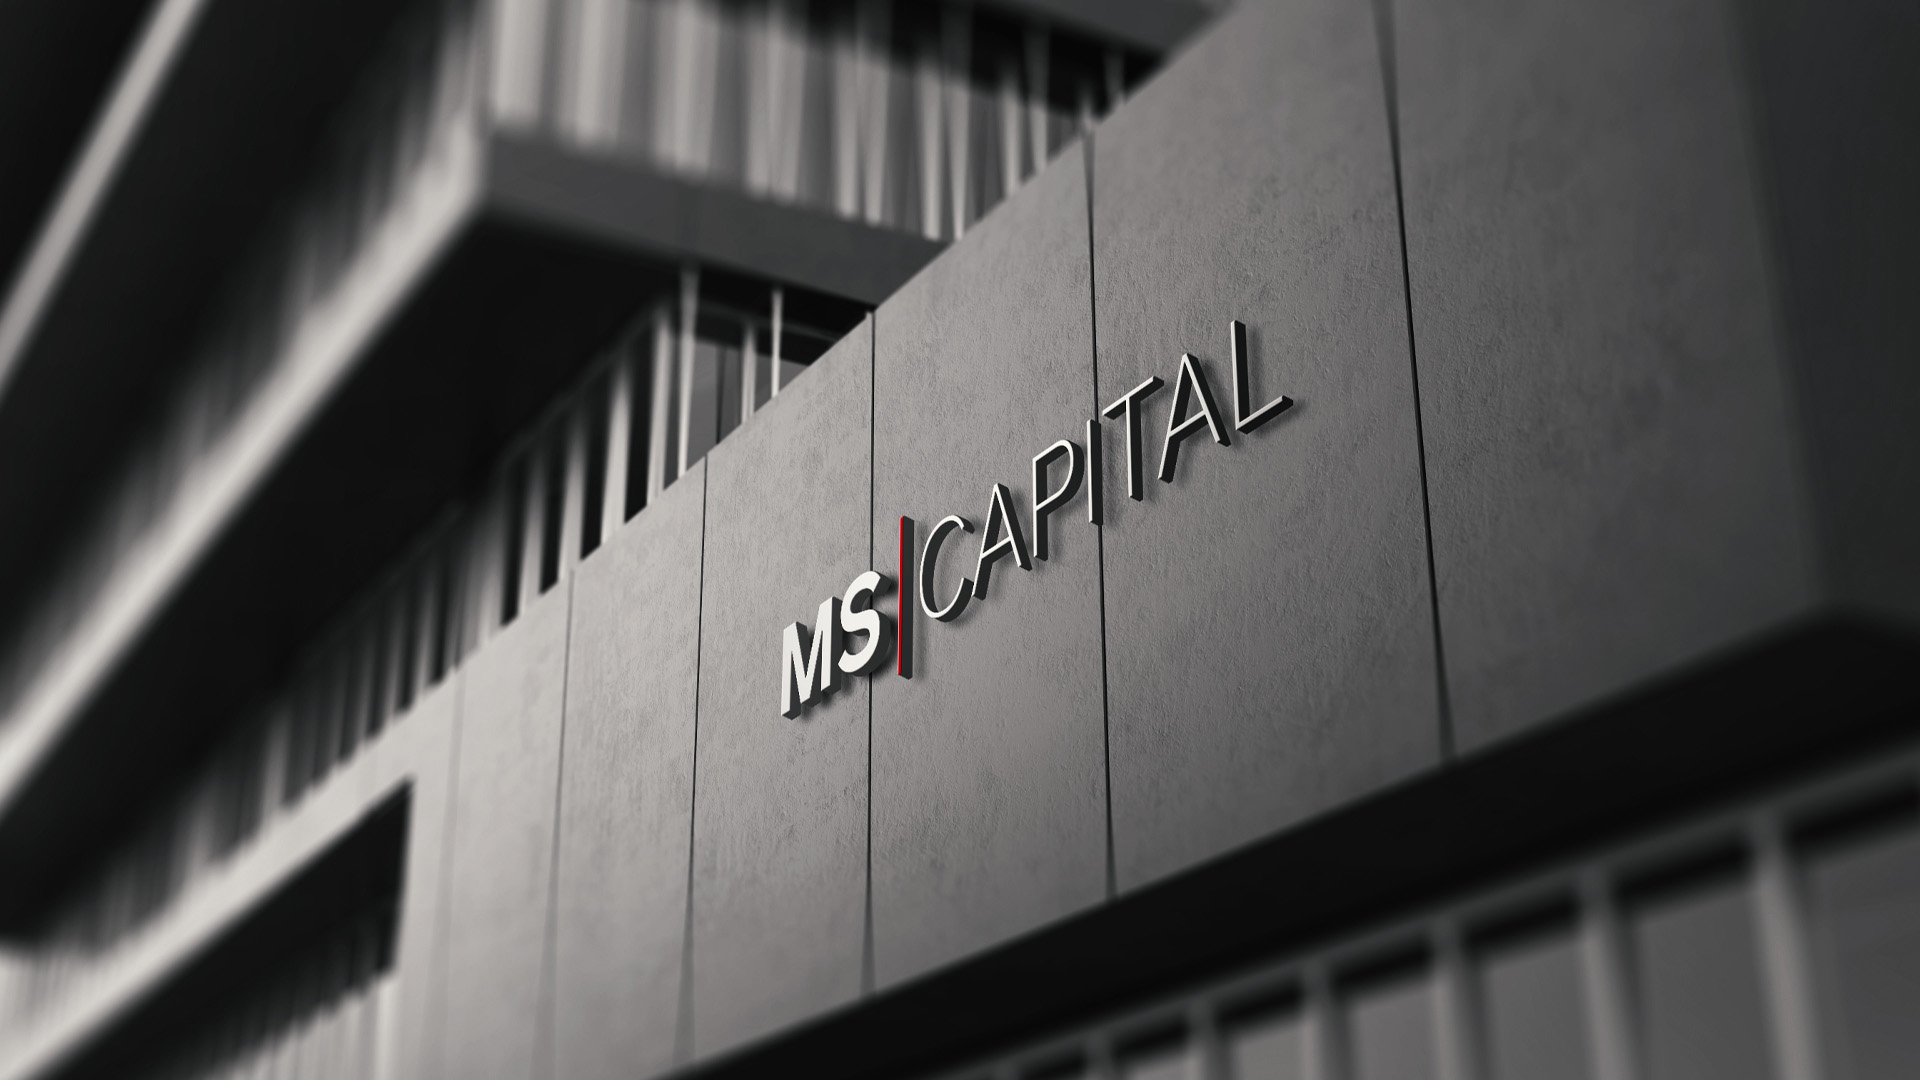 MS Capital